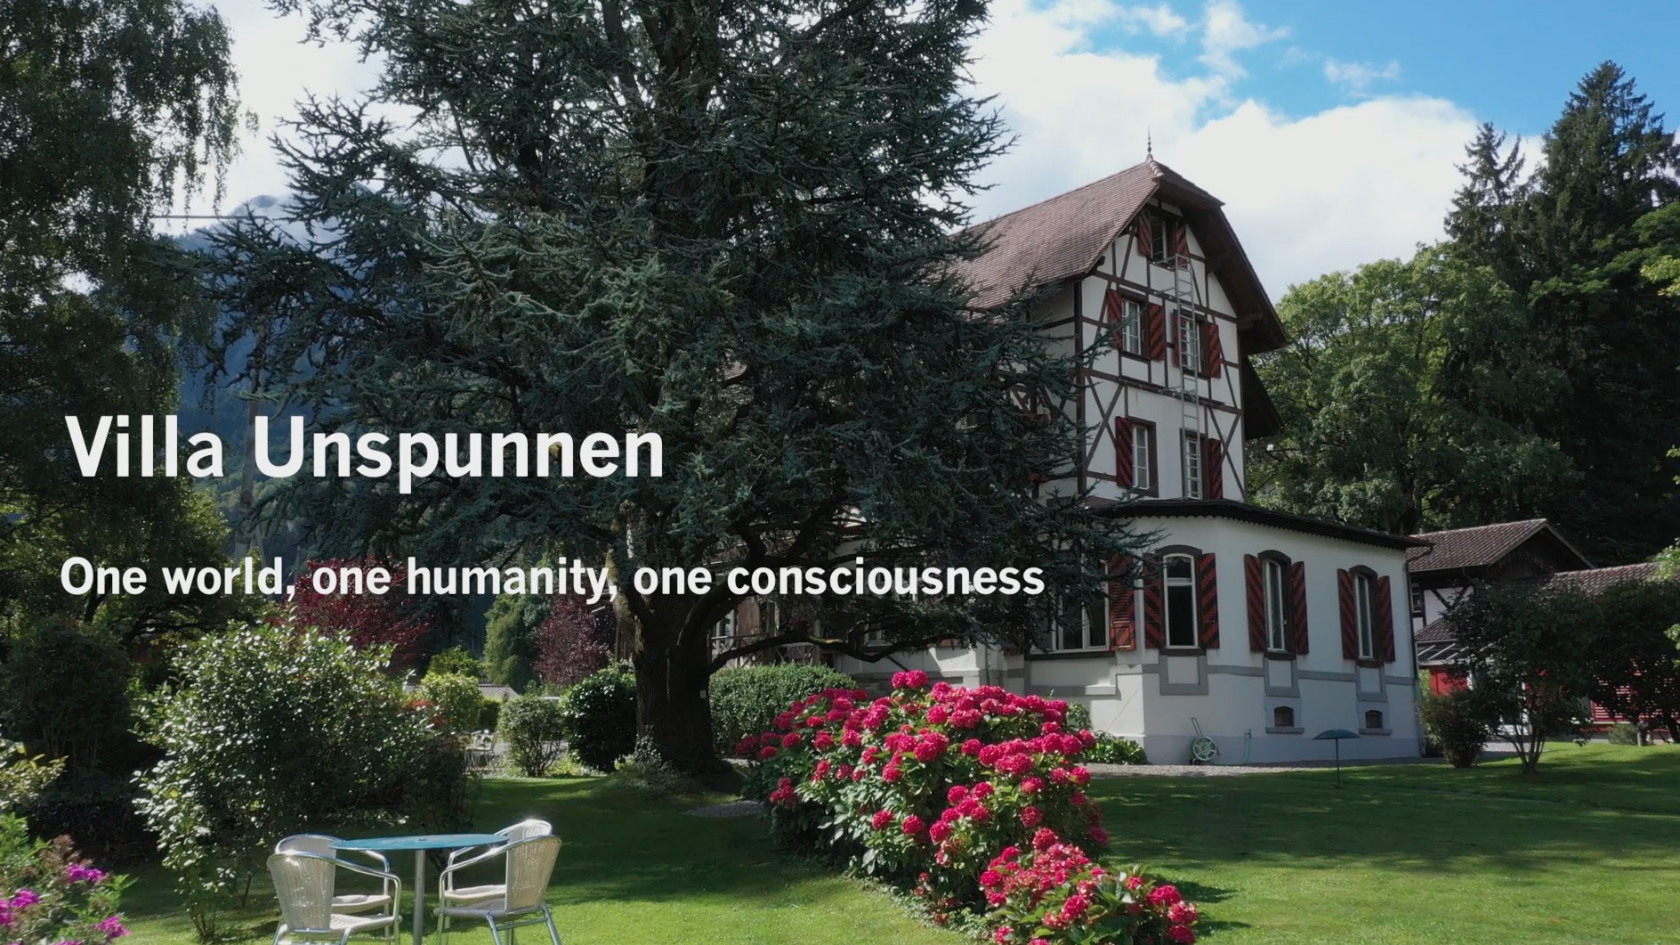 Villa Unspunnen - One world,
one humanity, one consciousness